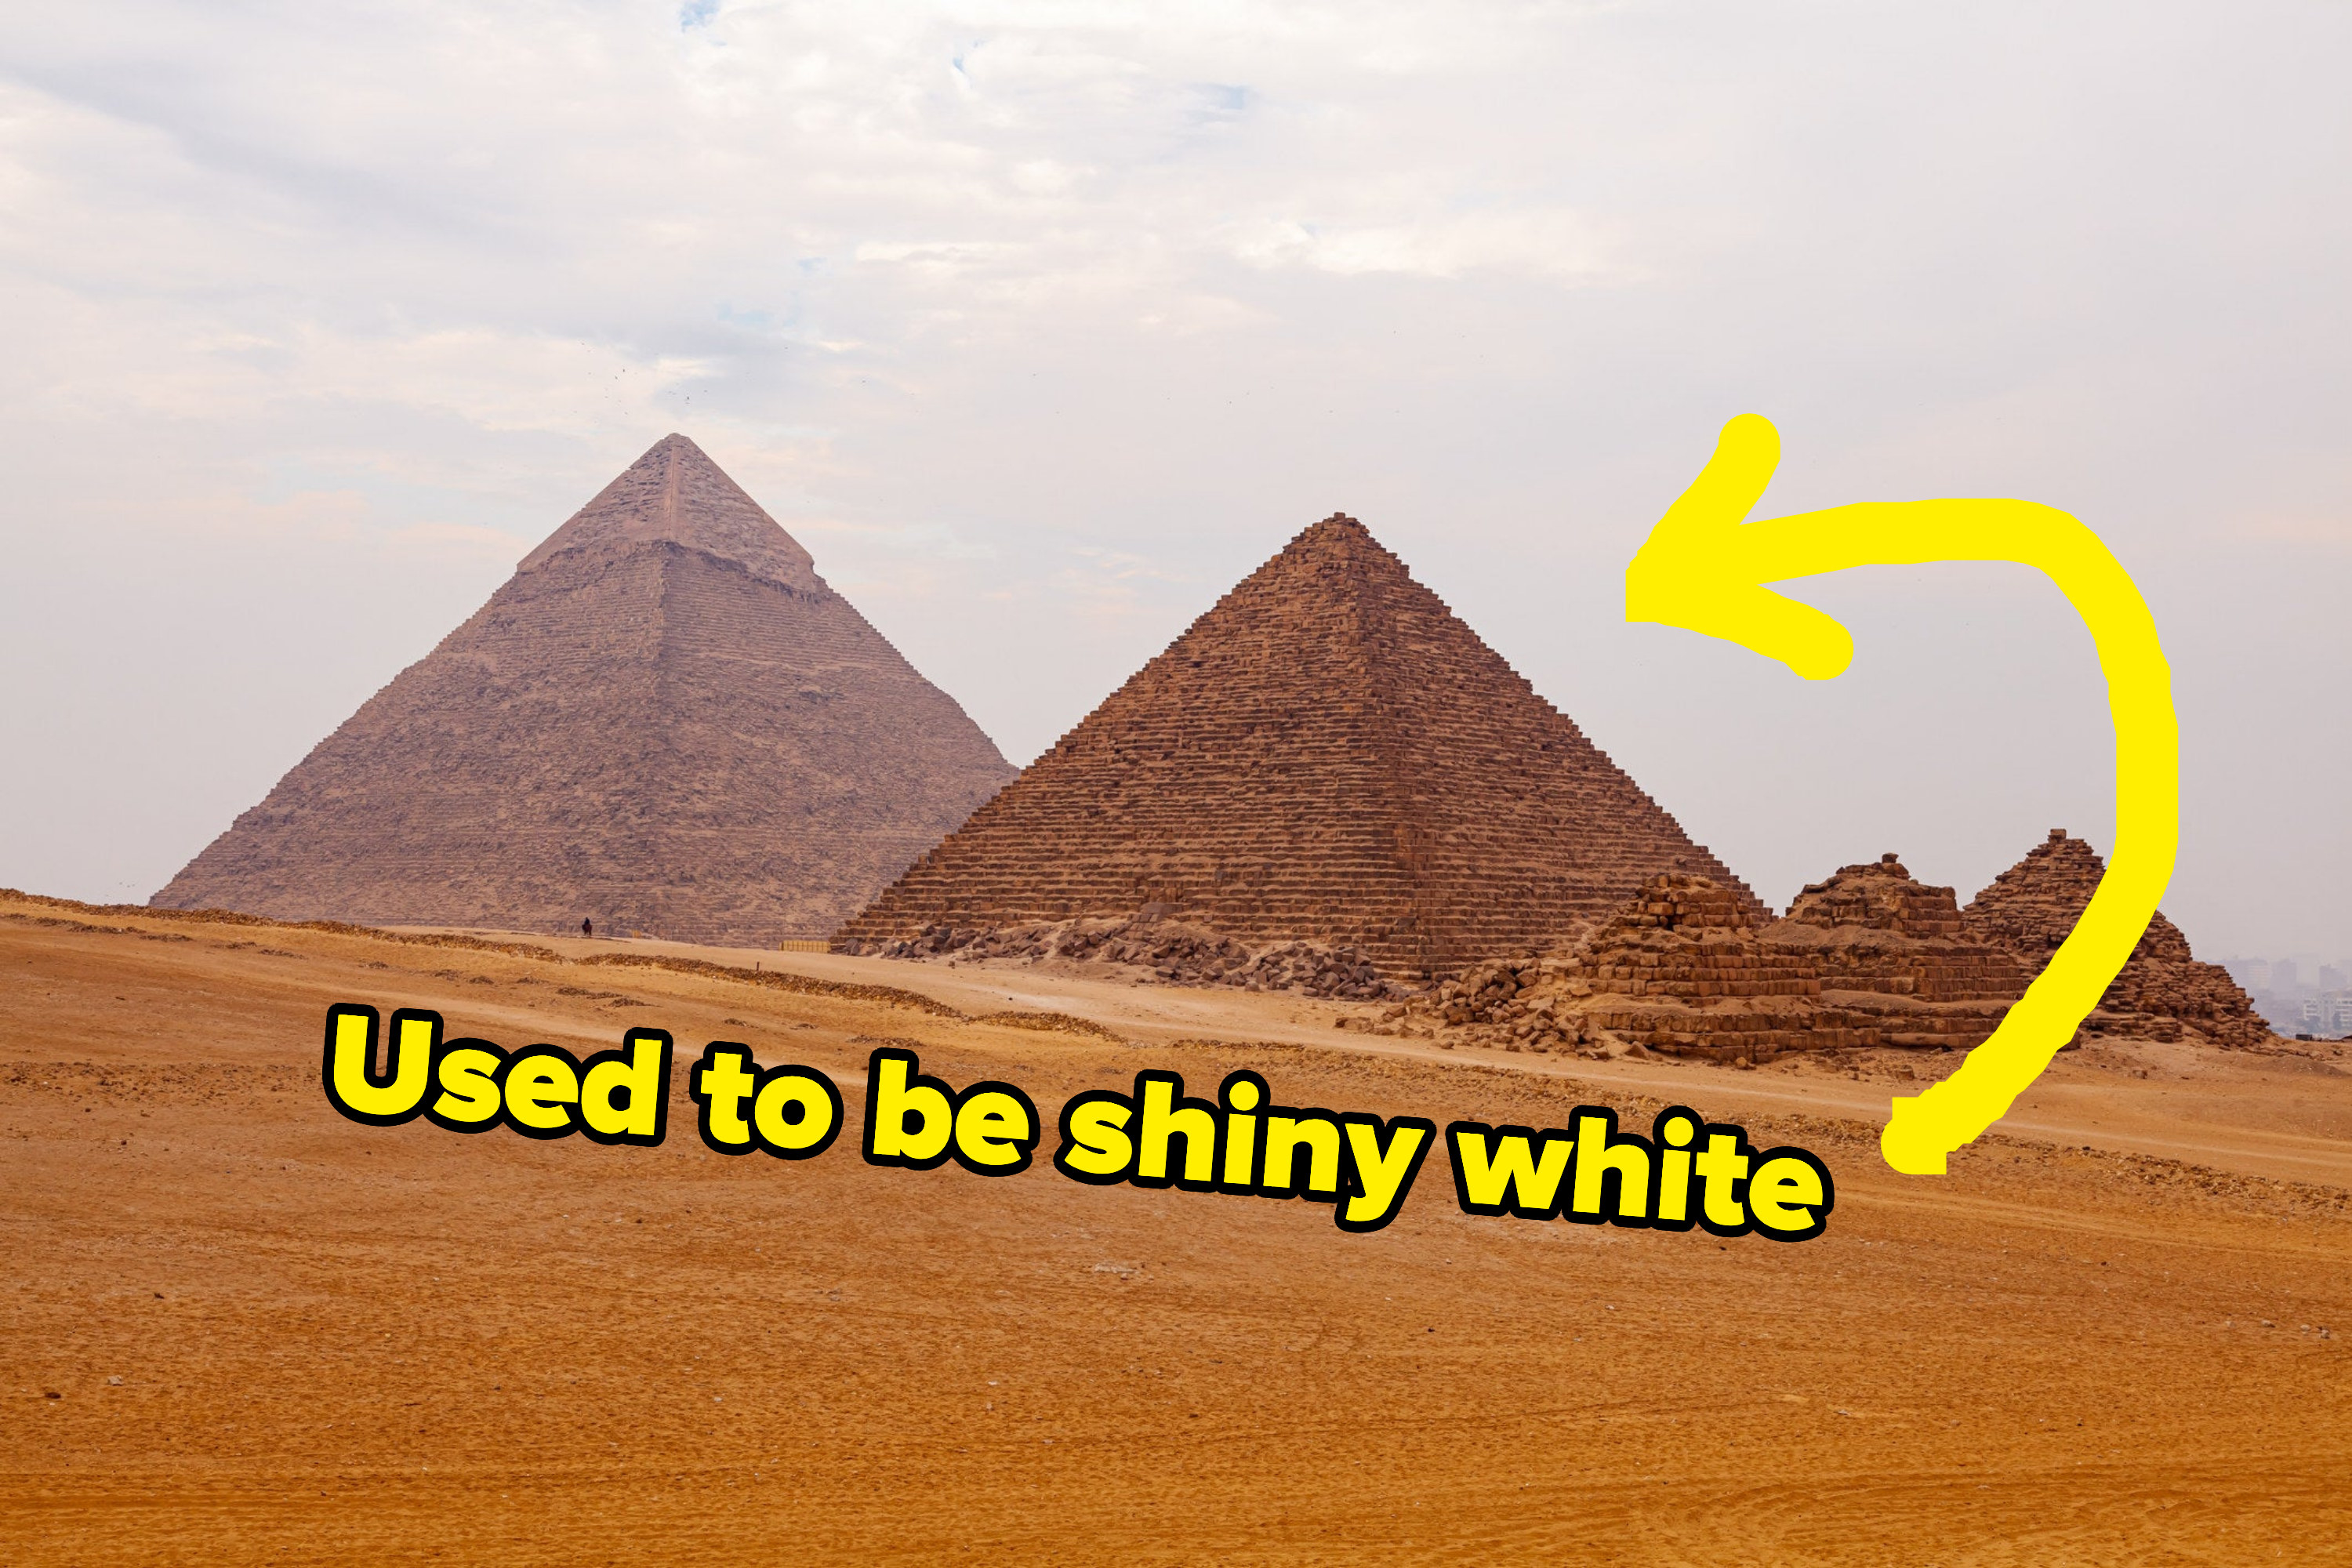 Pyramids used to be shiny white